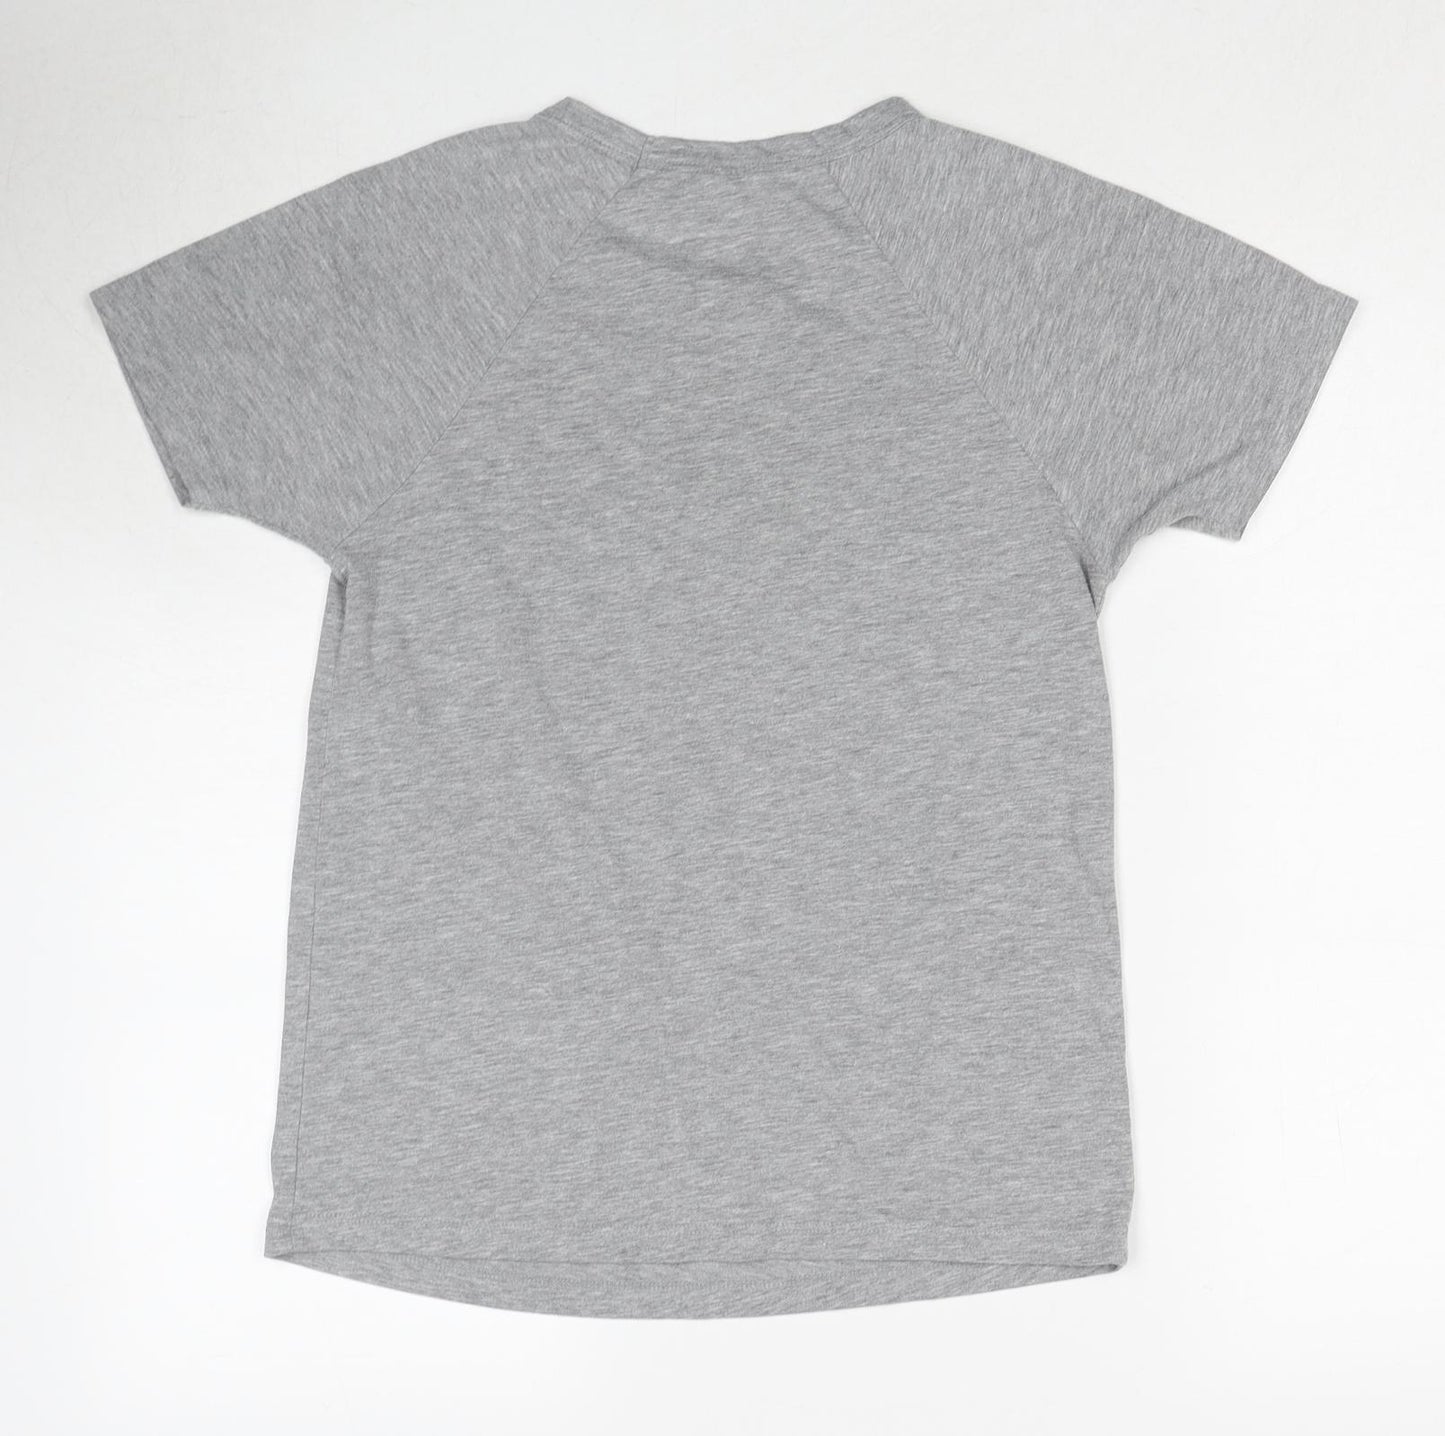 ASOS Womens Grey Cotton Basic T-Shirt Size 8 Round Neck